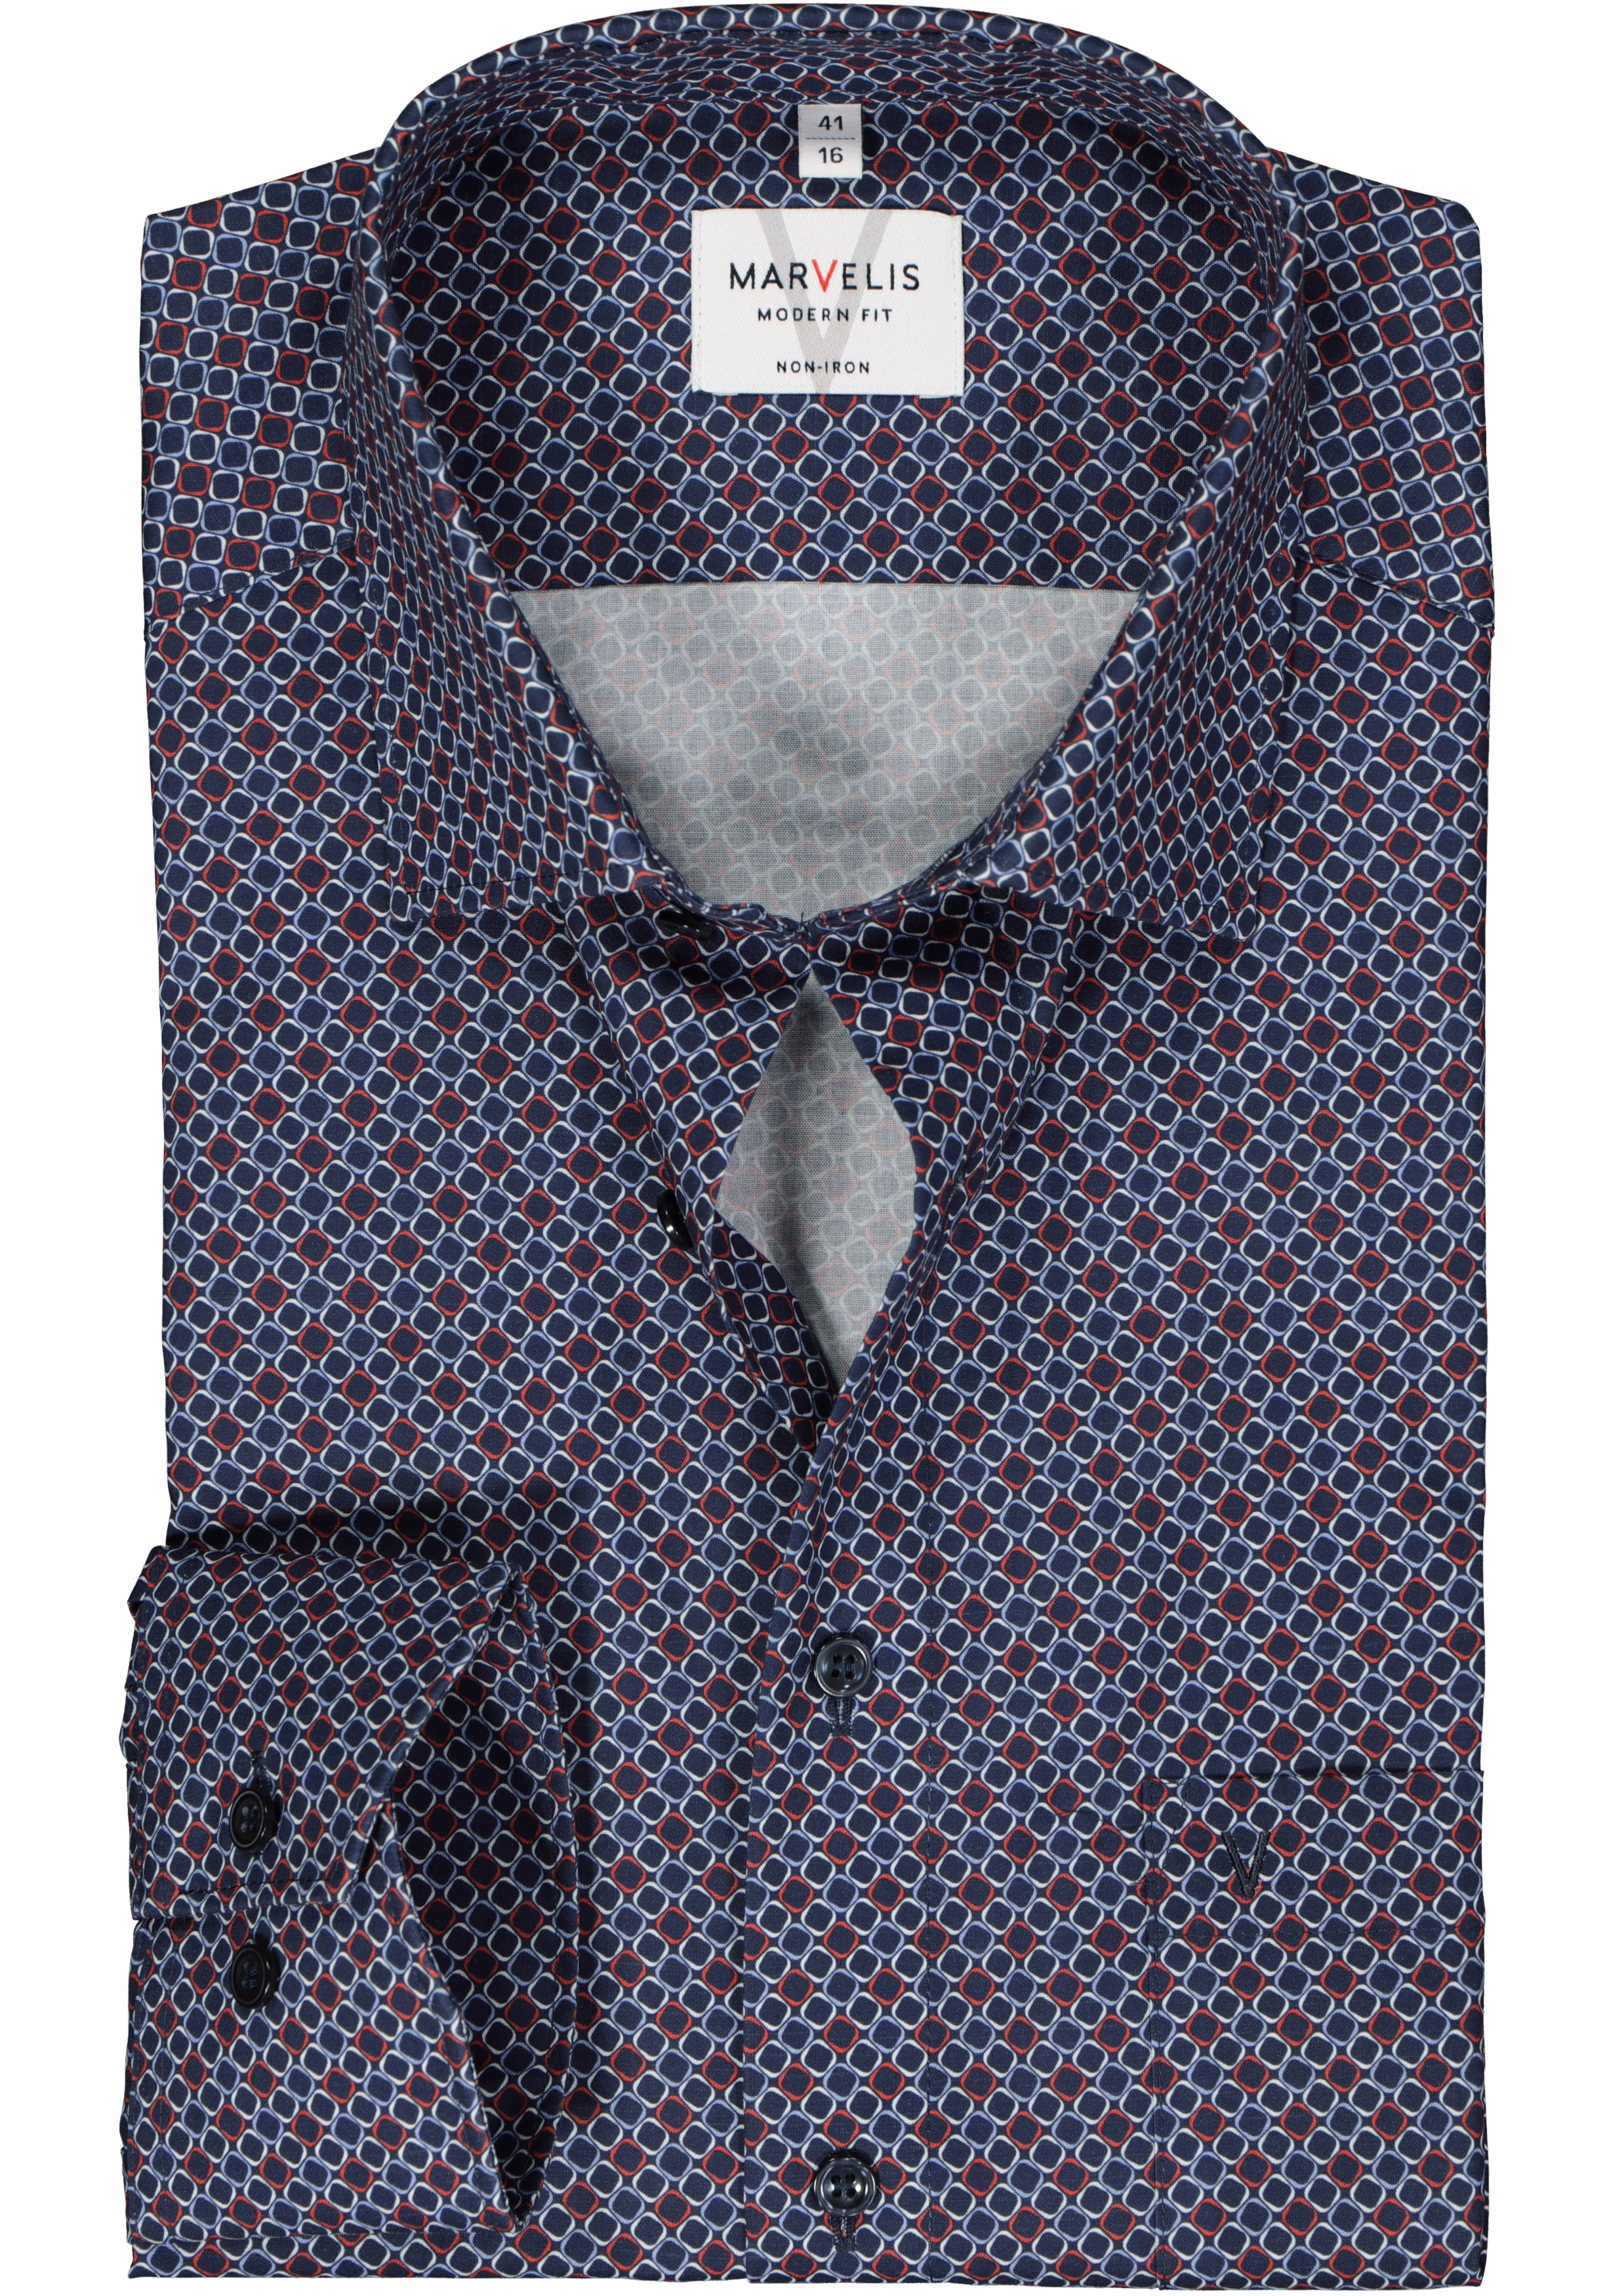 MARVELIS modern fit overhemd, mouwlengte 7, popeline, donkerblauw met rood, wit en lichtblauw dessin